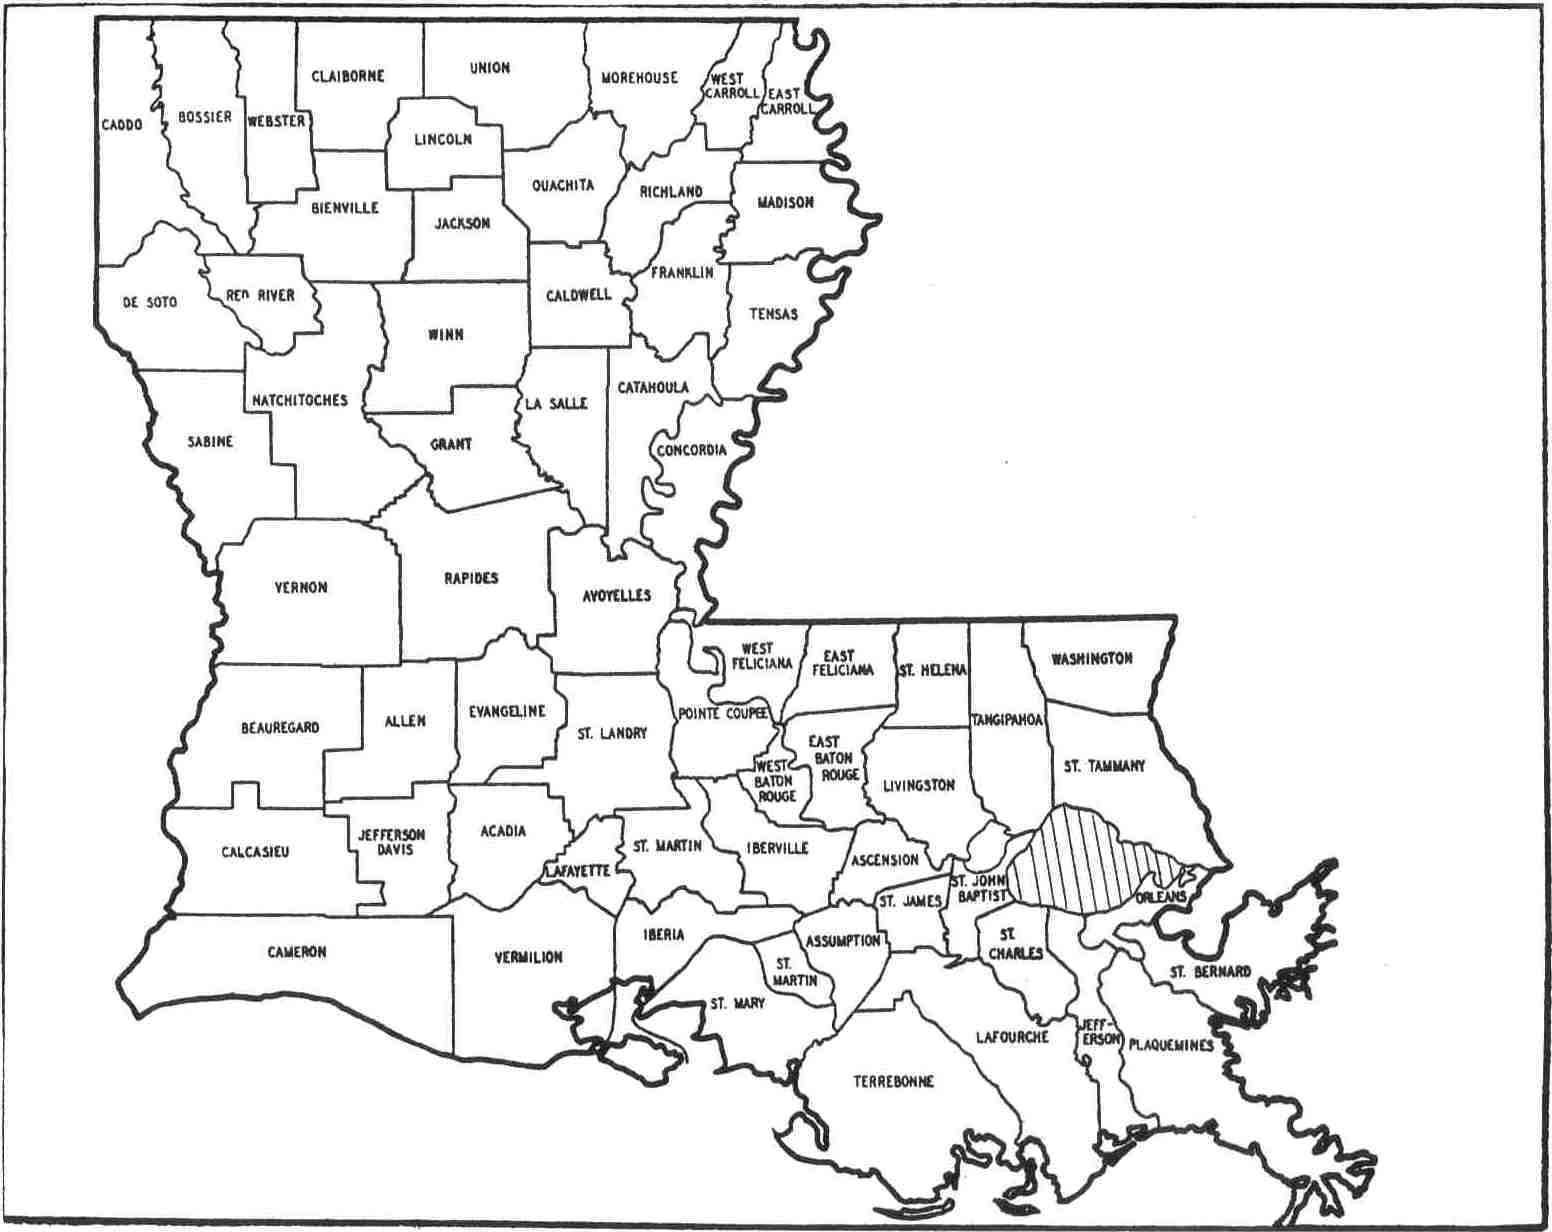 map-of-louisiana-cities-and-parishes-nar-media-kit